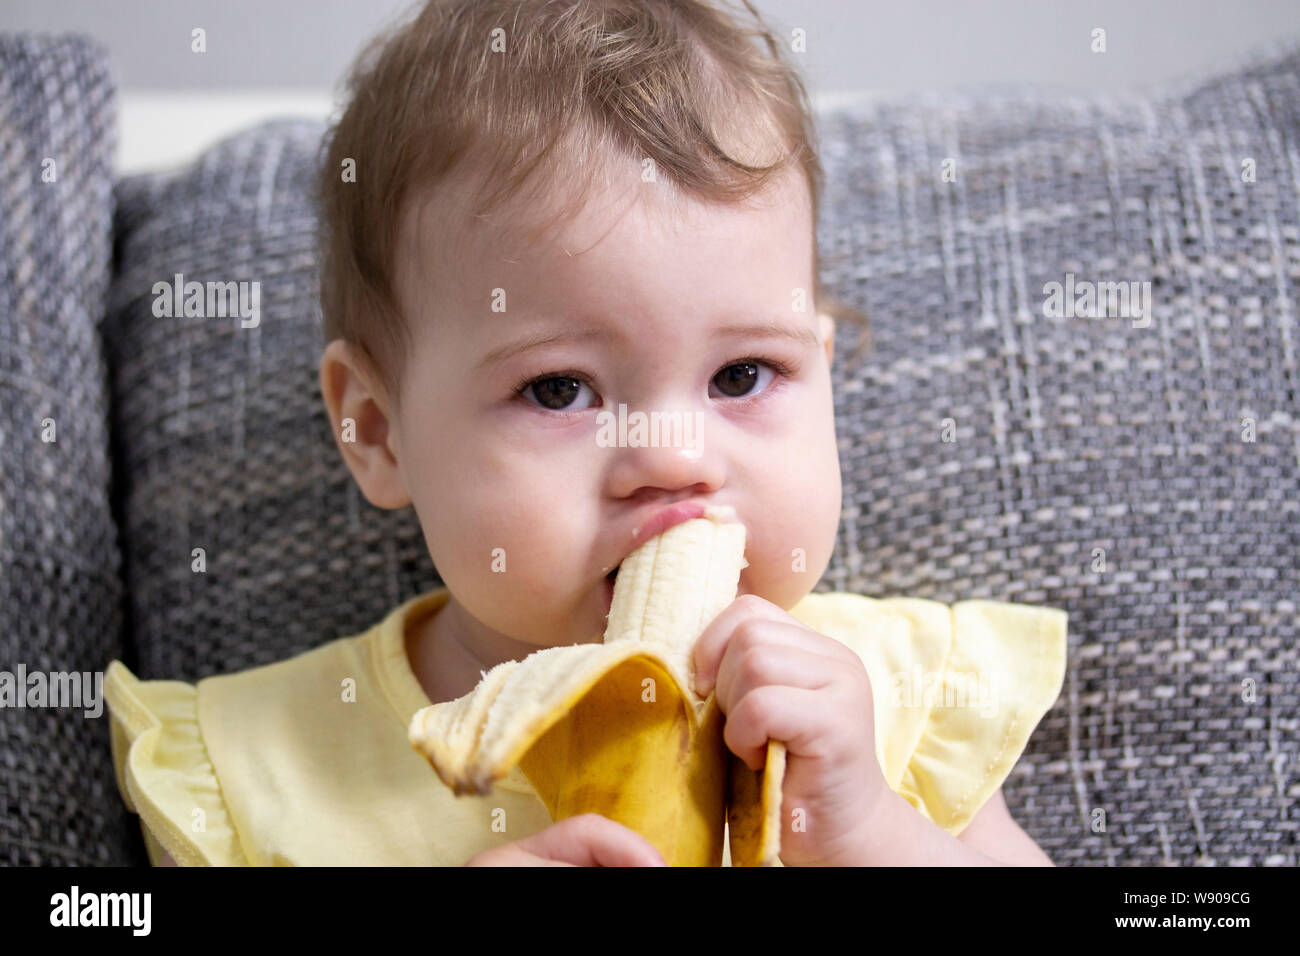 A girl eating banana -Fotos und -Bildmaterial in hoher Auflösung – Alamy